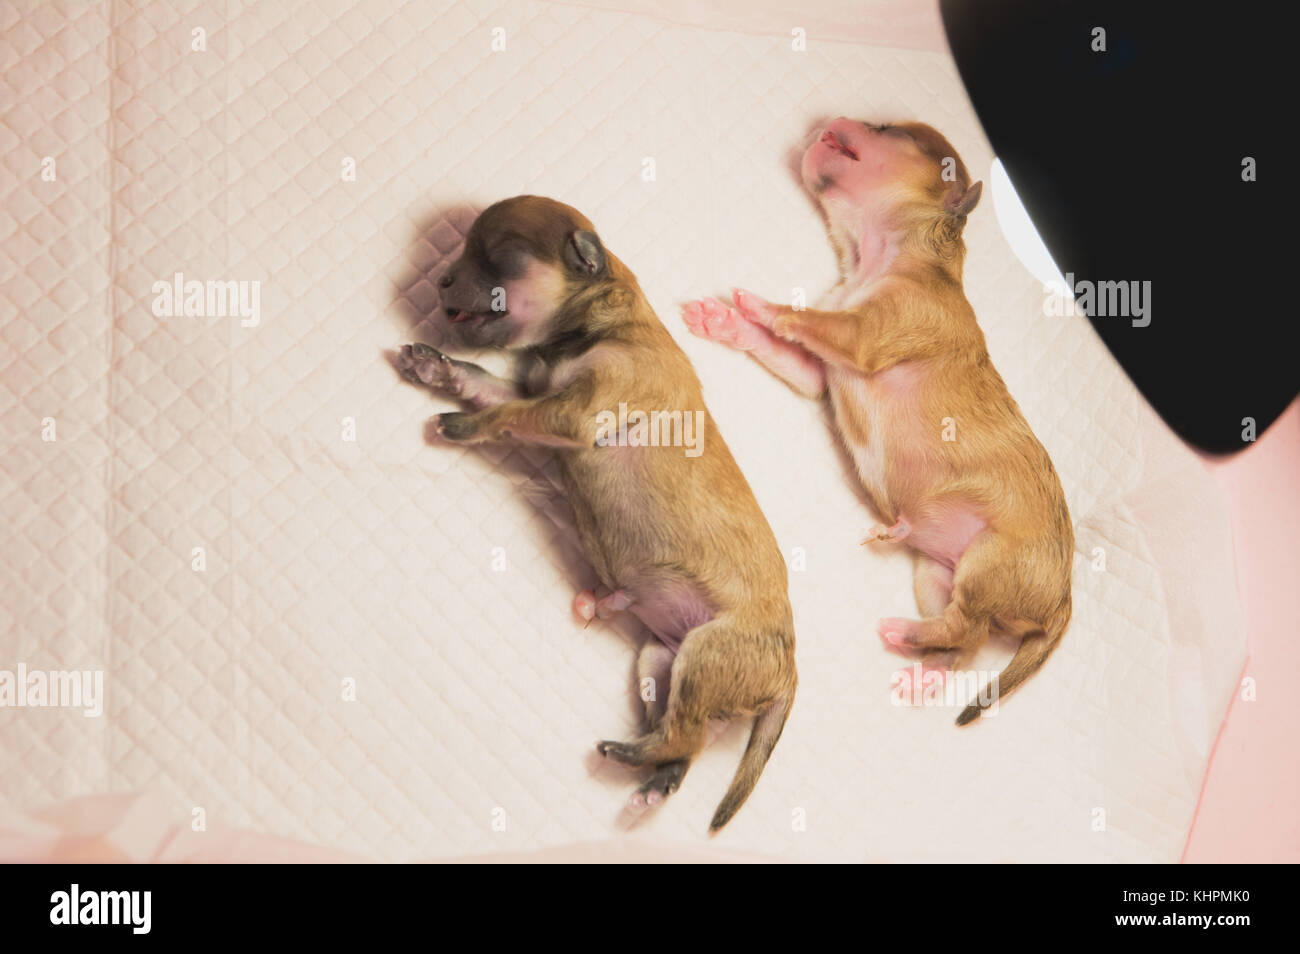 Sweet newborn puppys sleeping under the light for warmth. Stock Photo